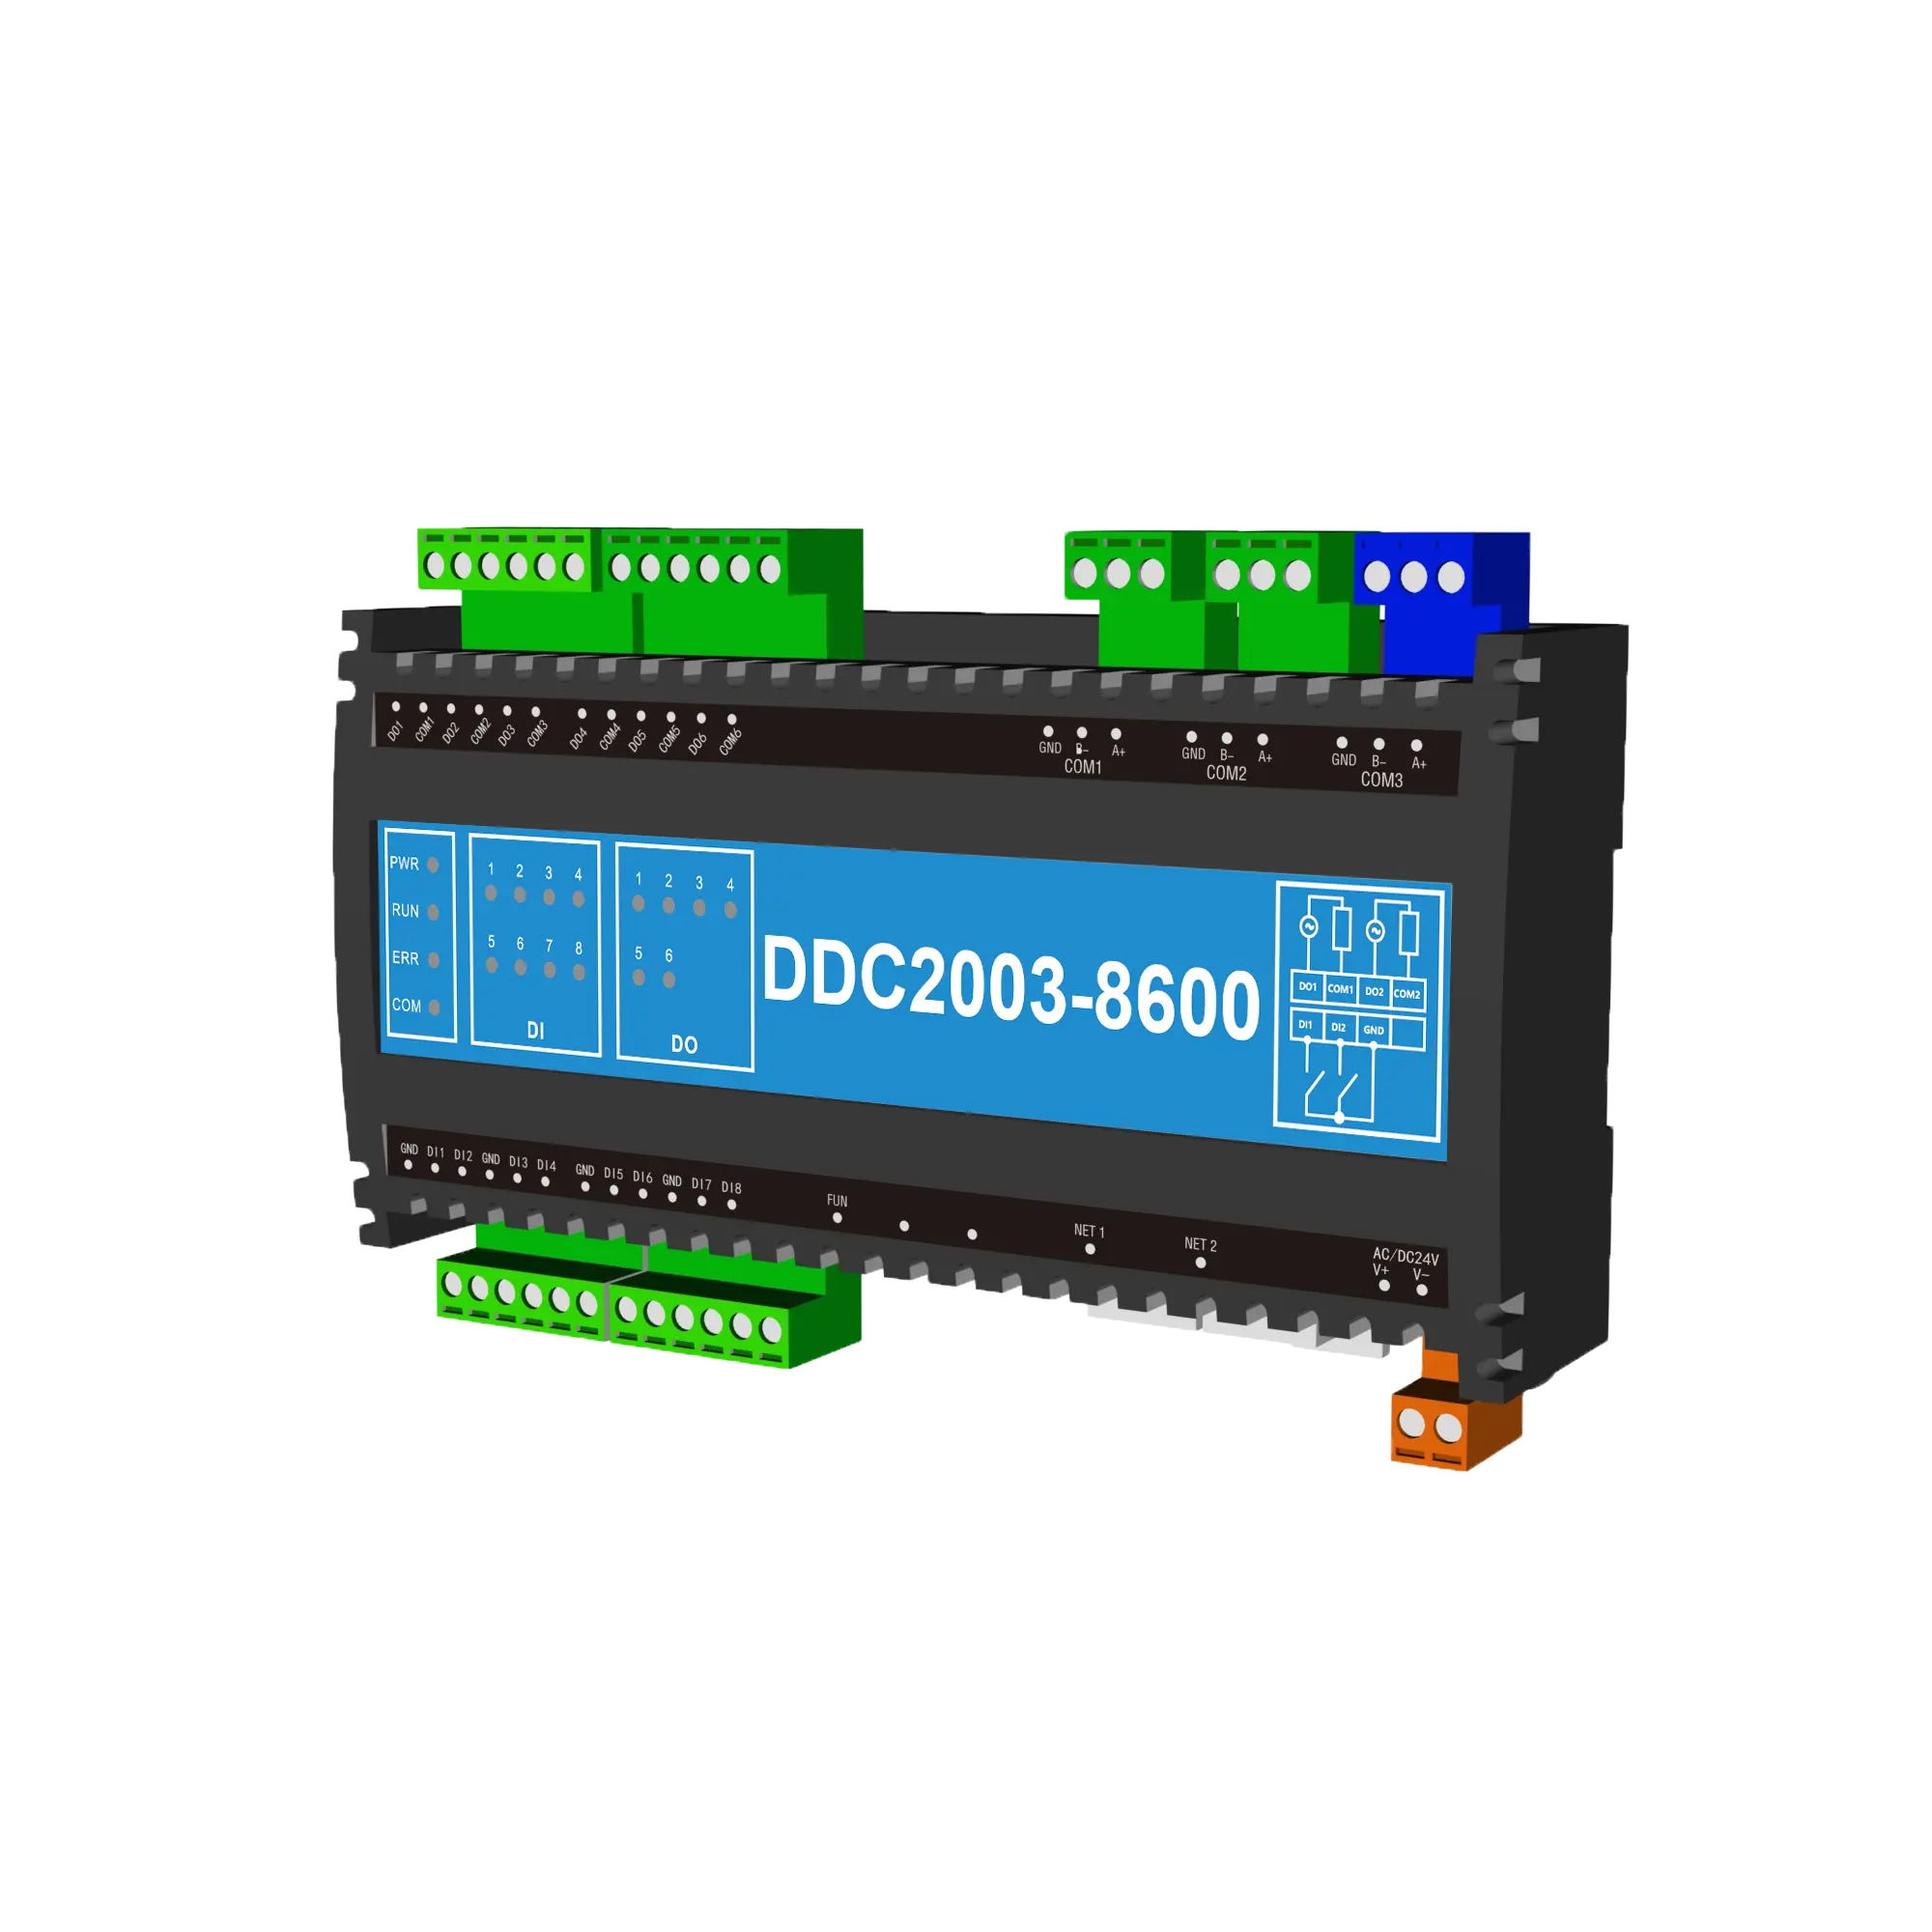 Iot 솔루션 모니터링을 위한 Milesgo DDC 컨트롤러 HMI 올인원 지원 DI/DO Modbus BACnet 프로토콜